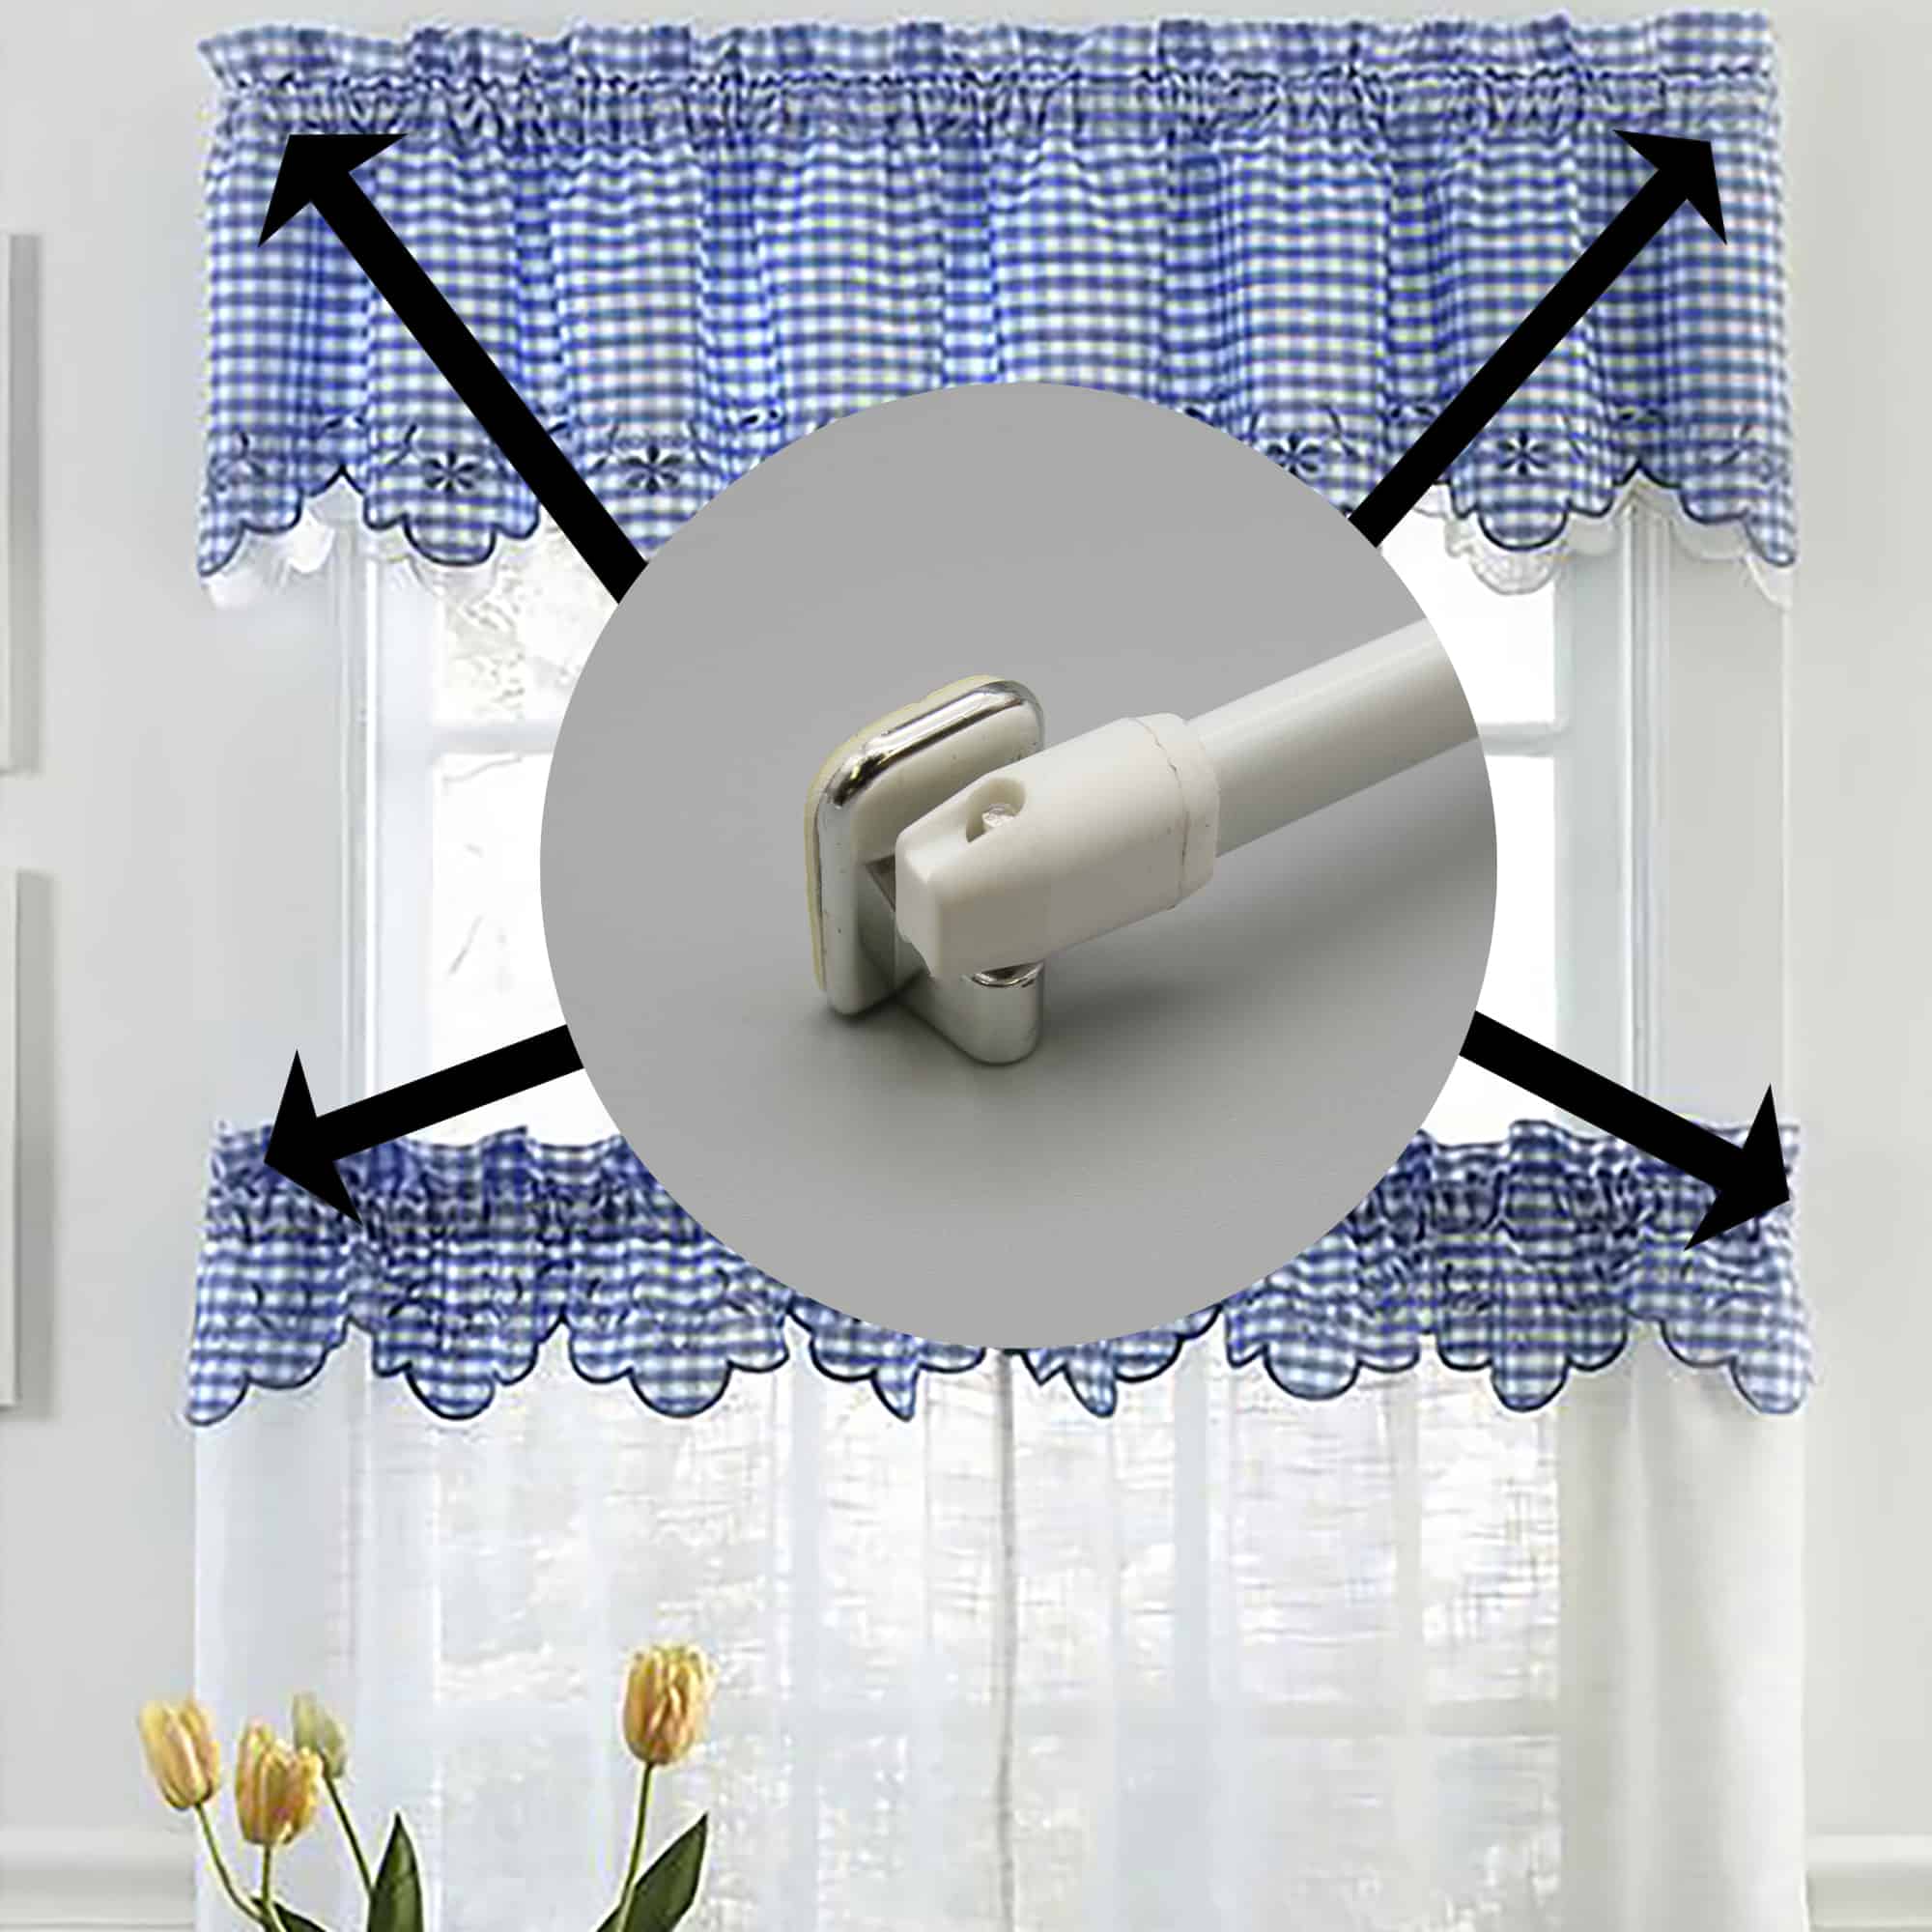 Self Adhesive Hooks Sash Rod Kitchen Curtains Set of 4 - Silver